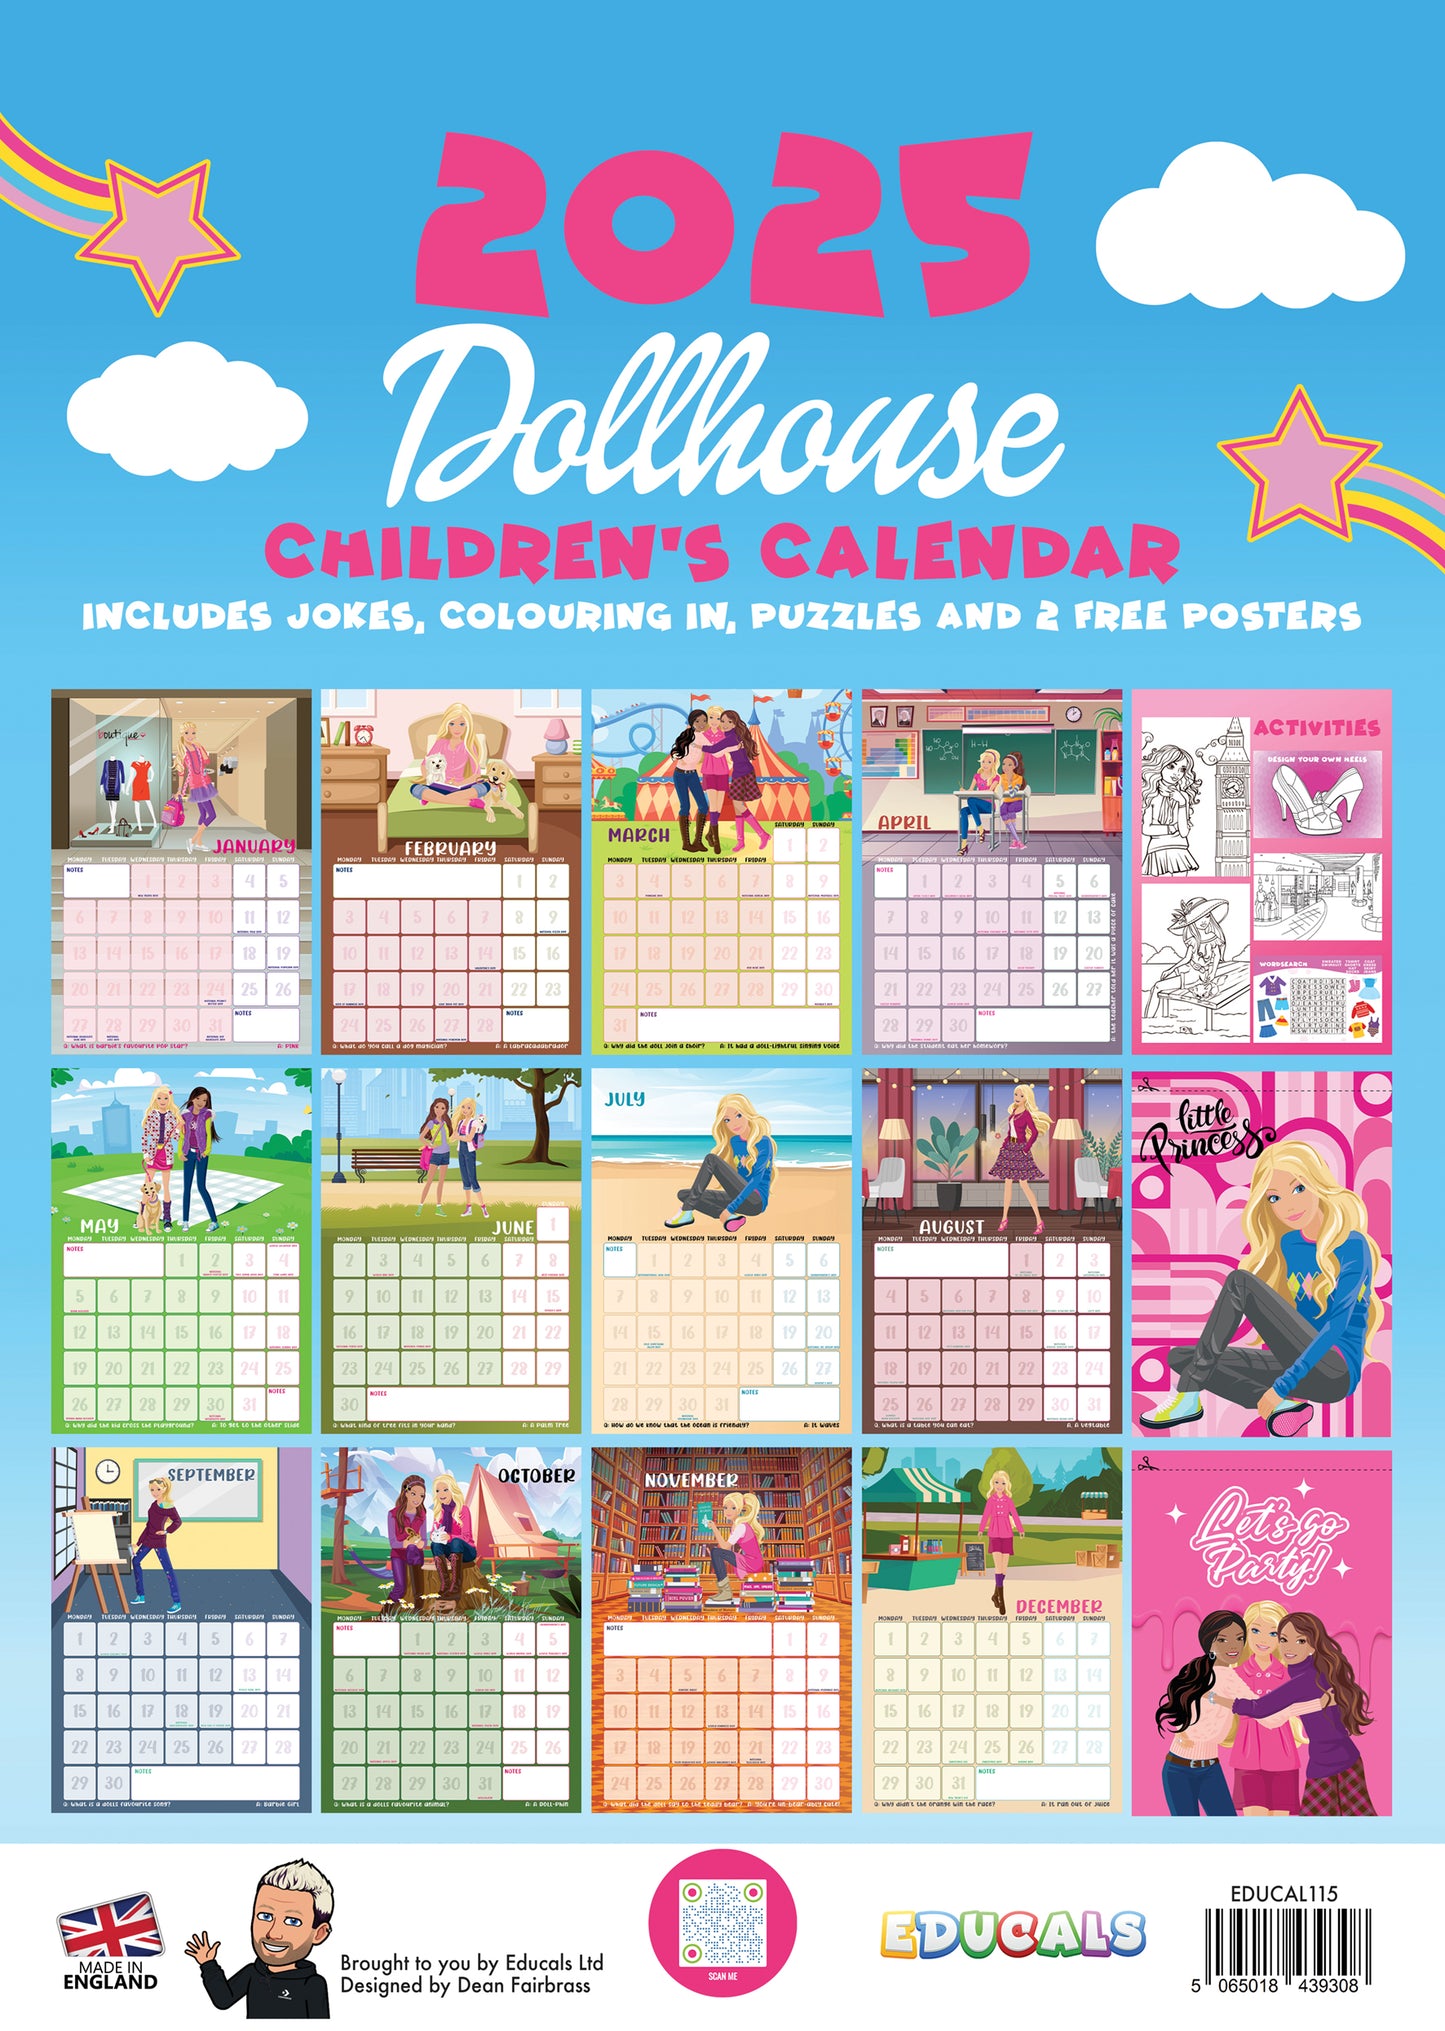 Children's 2025 Dollhouse Calendar